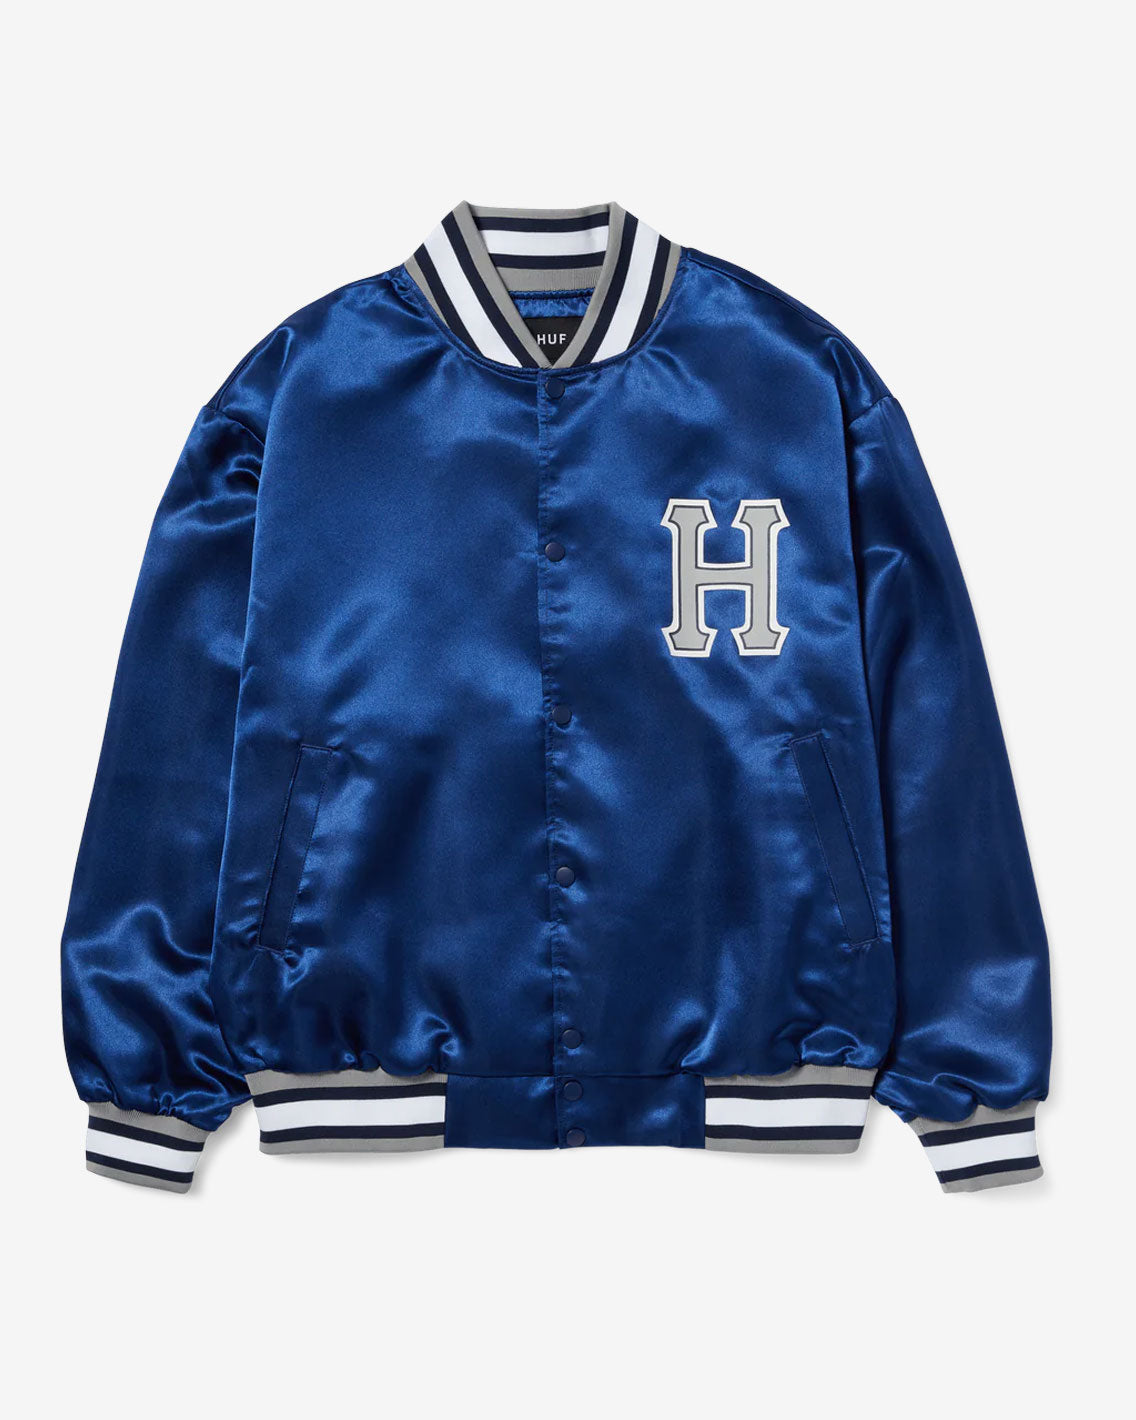 HUF - Crackerjack Satin Baseball Jacket - Navy